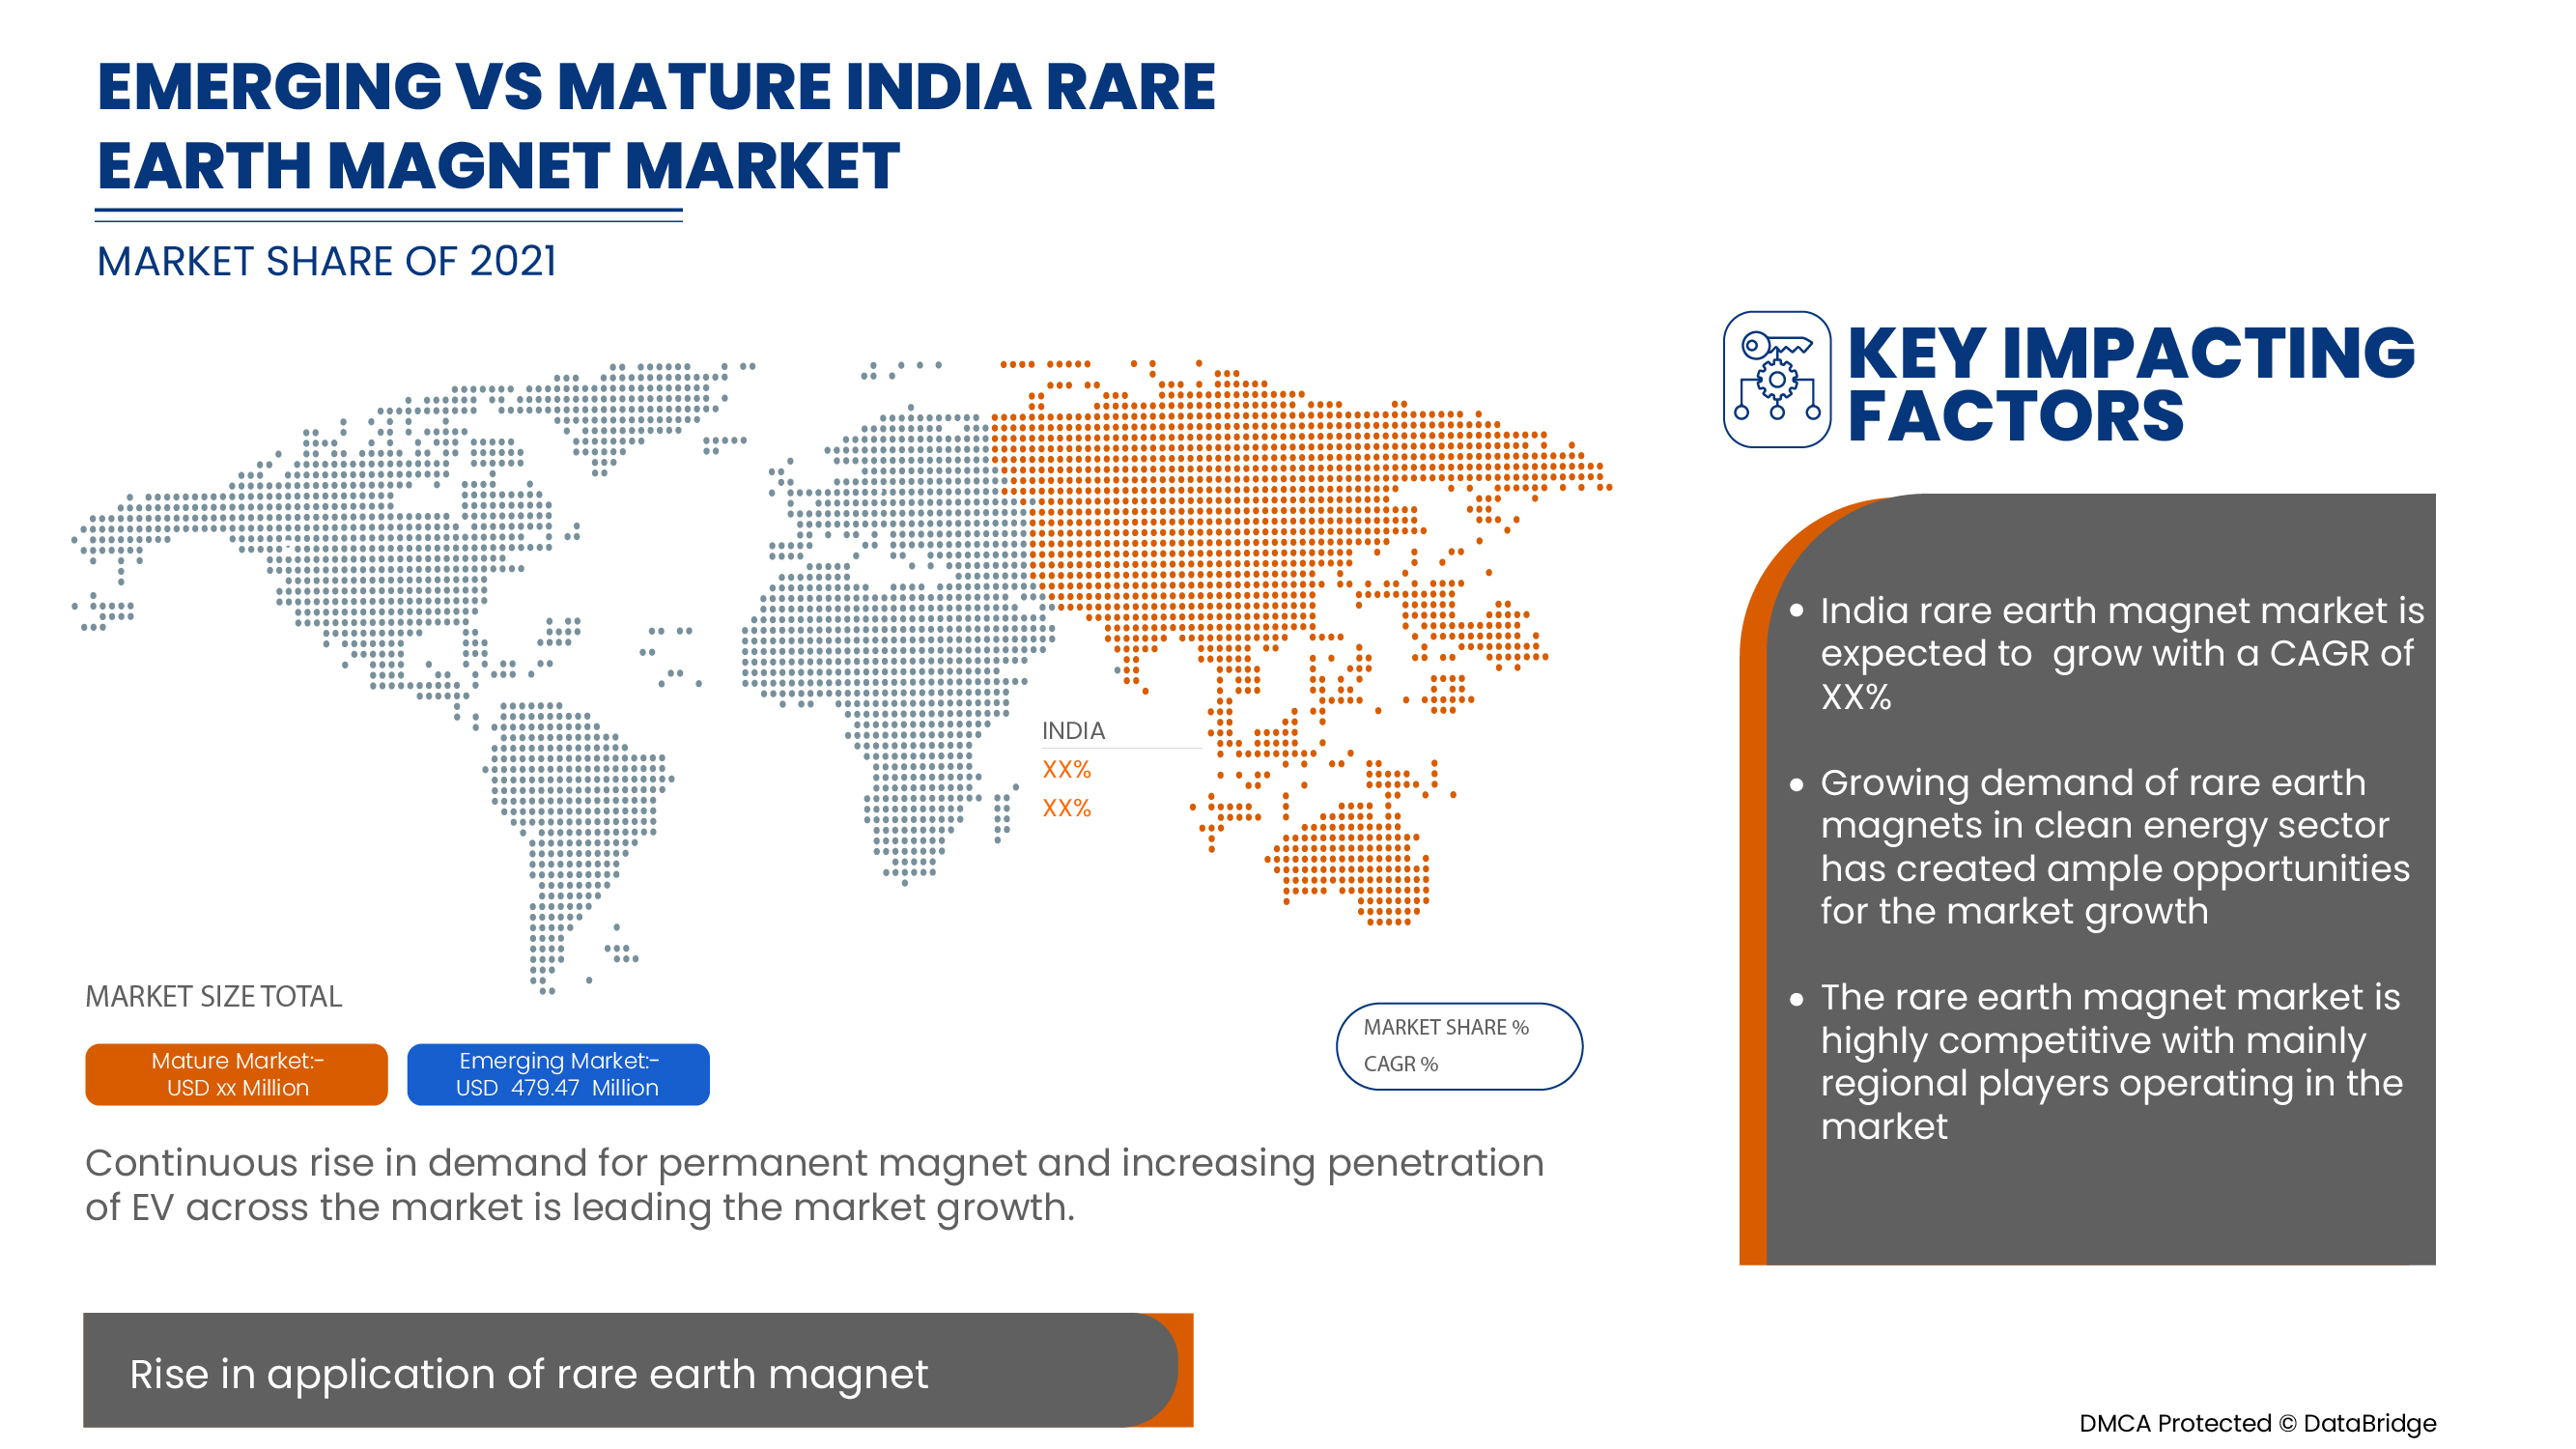 India Rare Earth Magnet Market